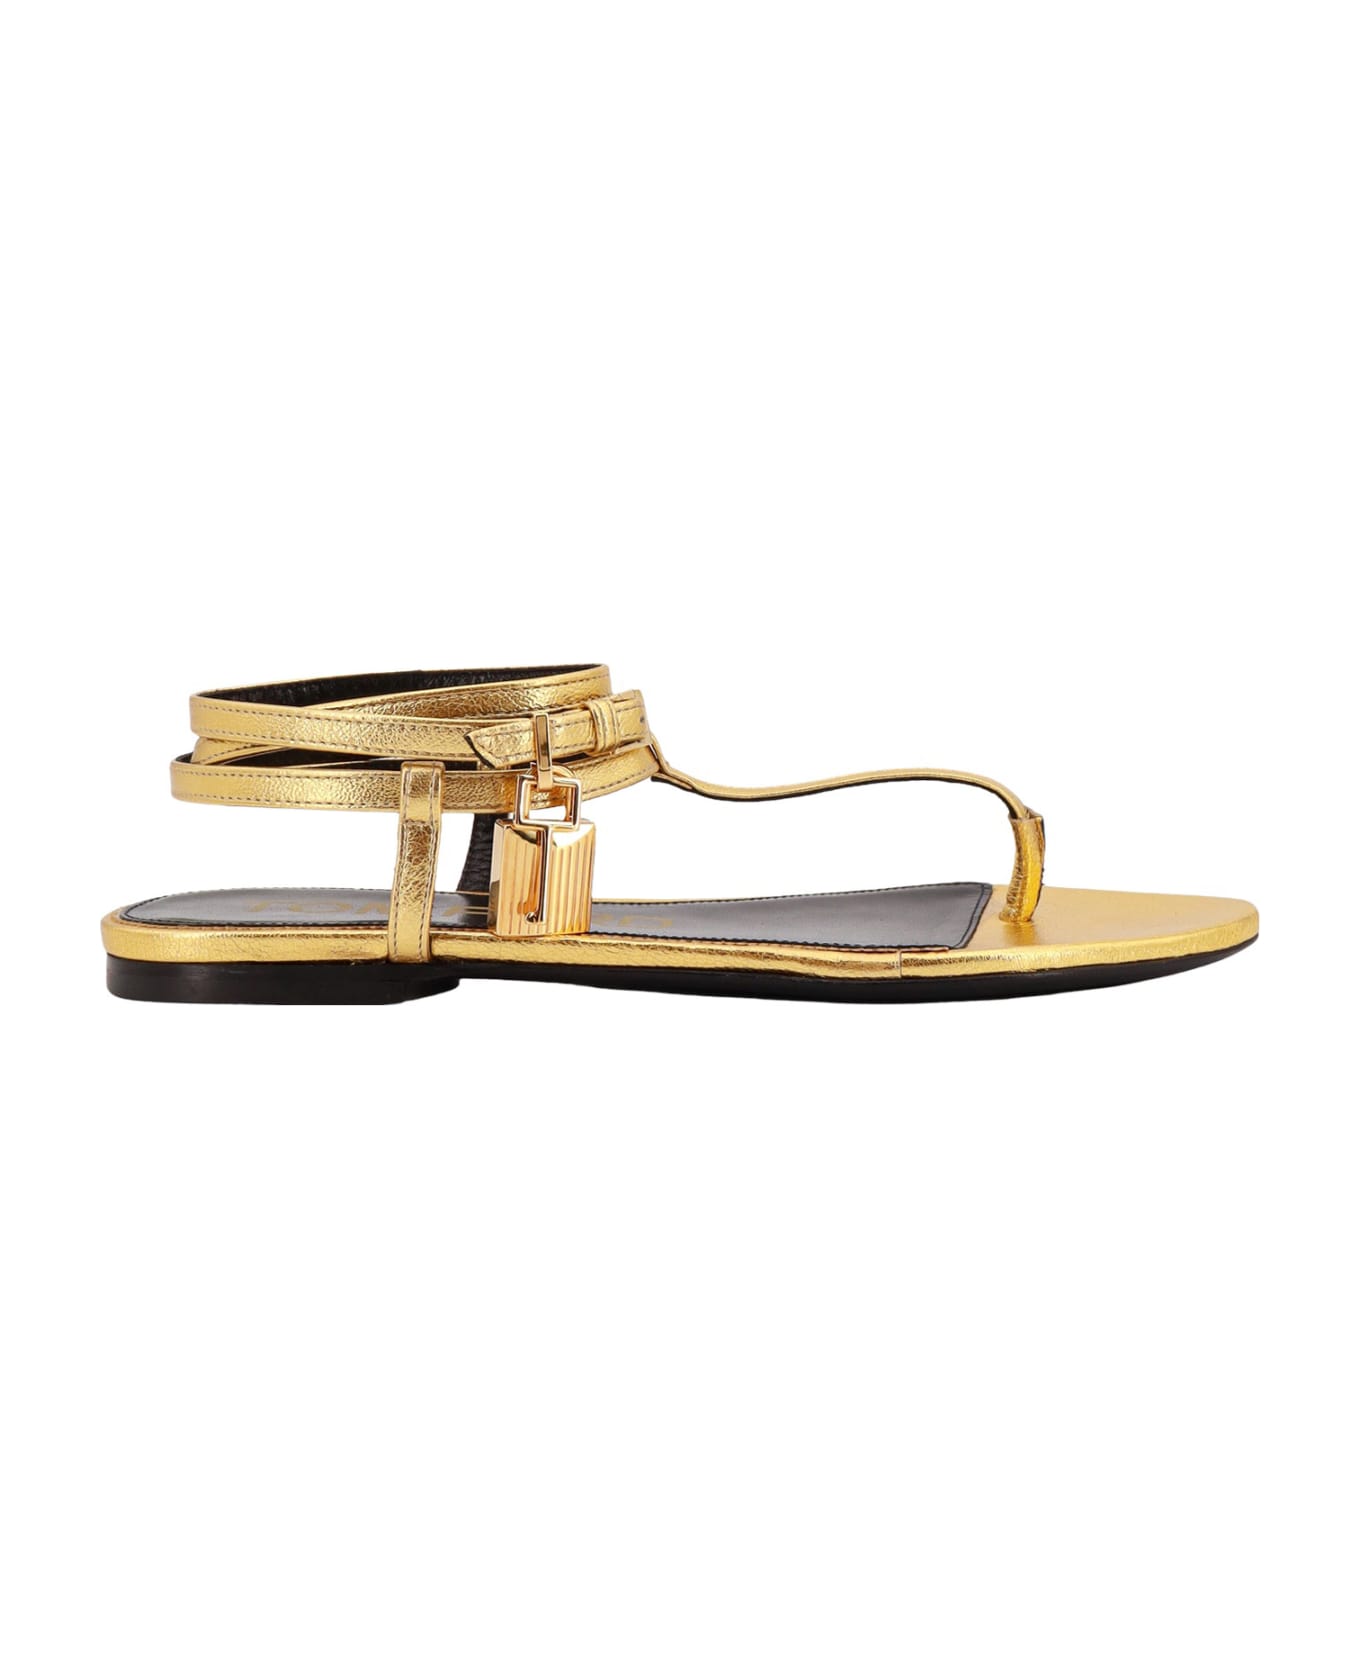 Tom Ford Sandals - Gold